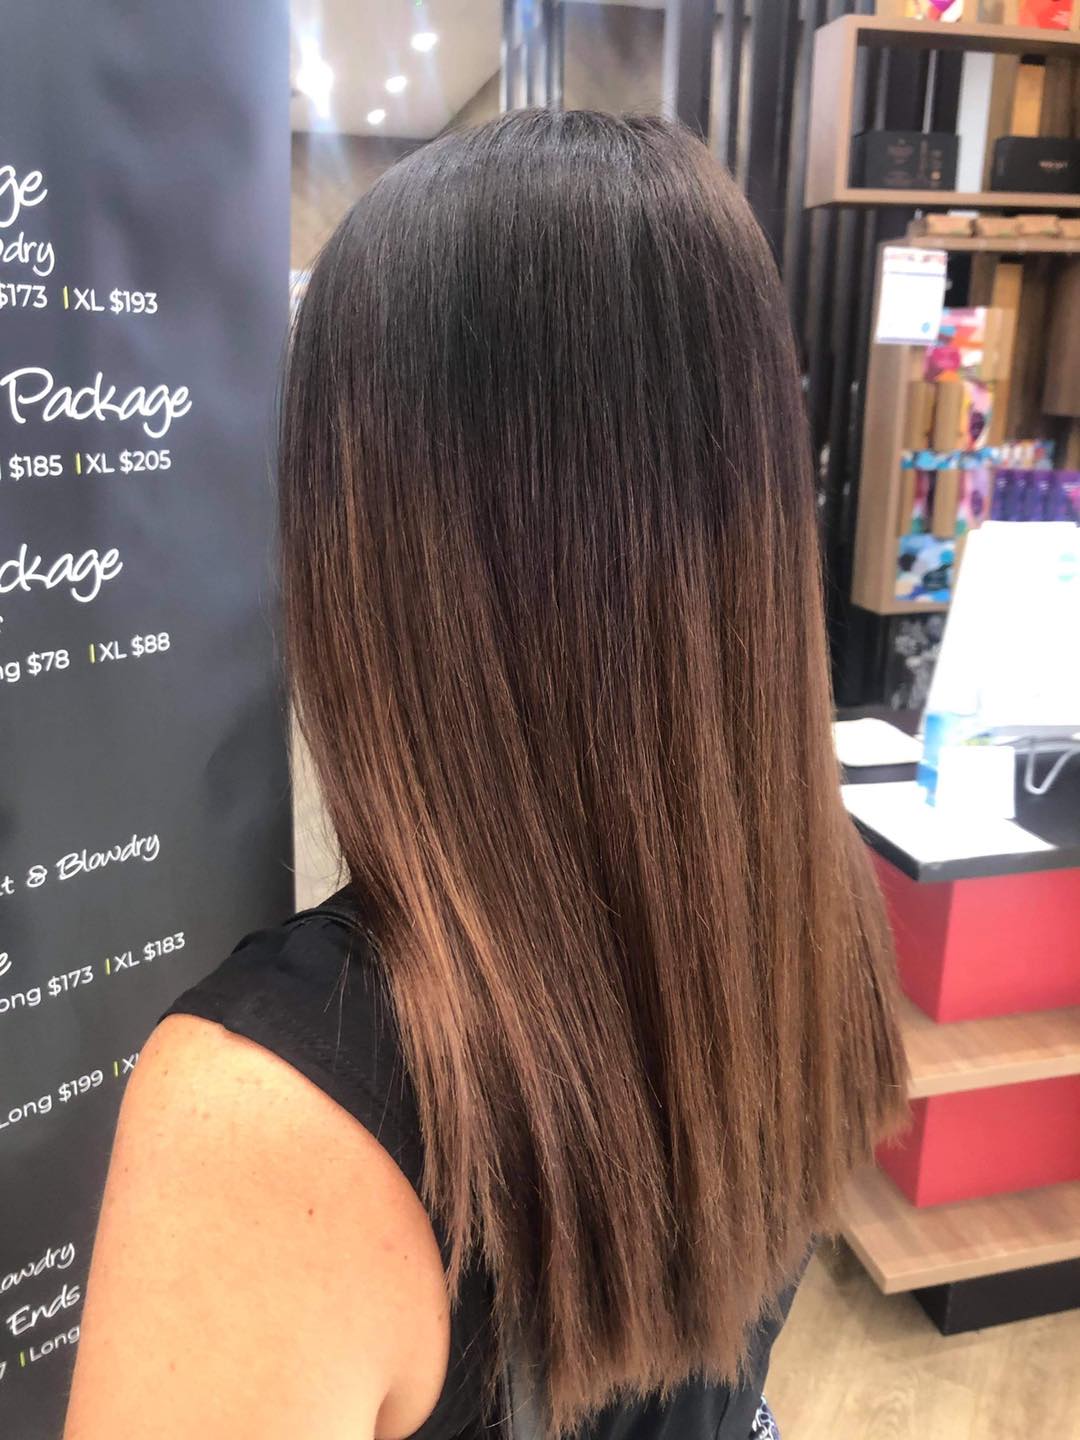 Long Brown Hair After Cut - Hair Salon in Worrigee, NSW